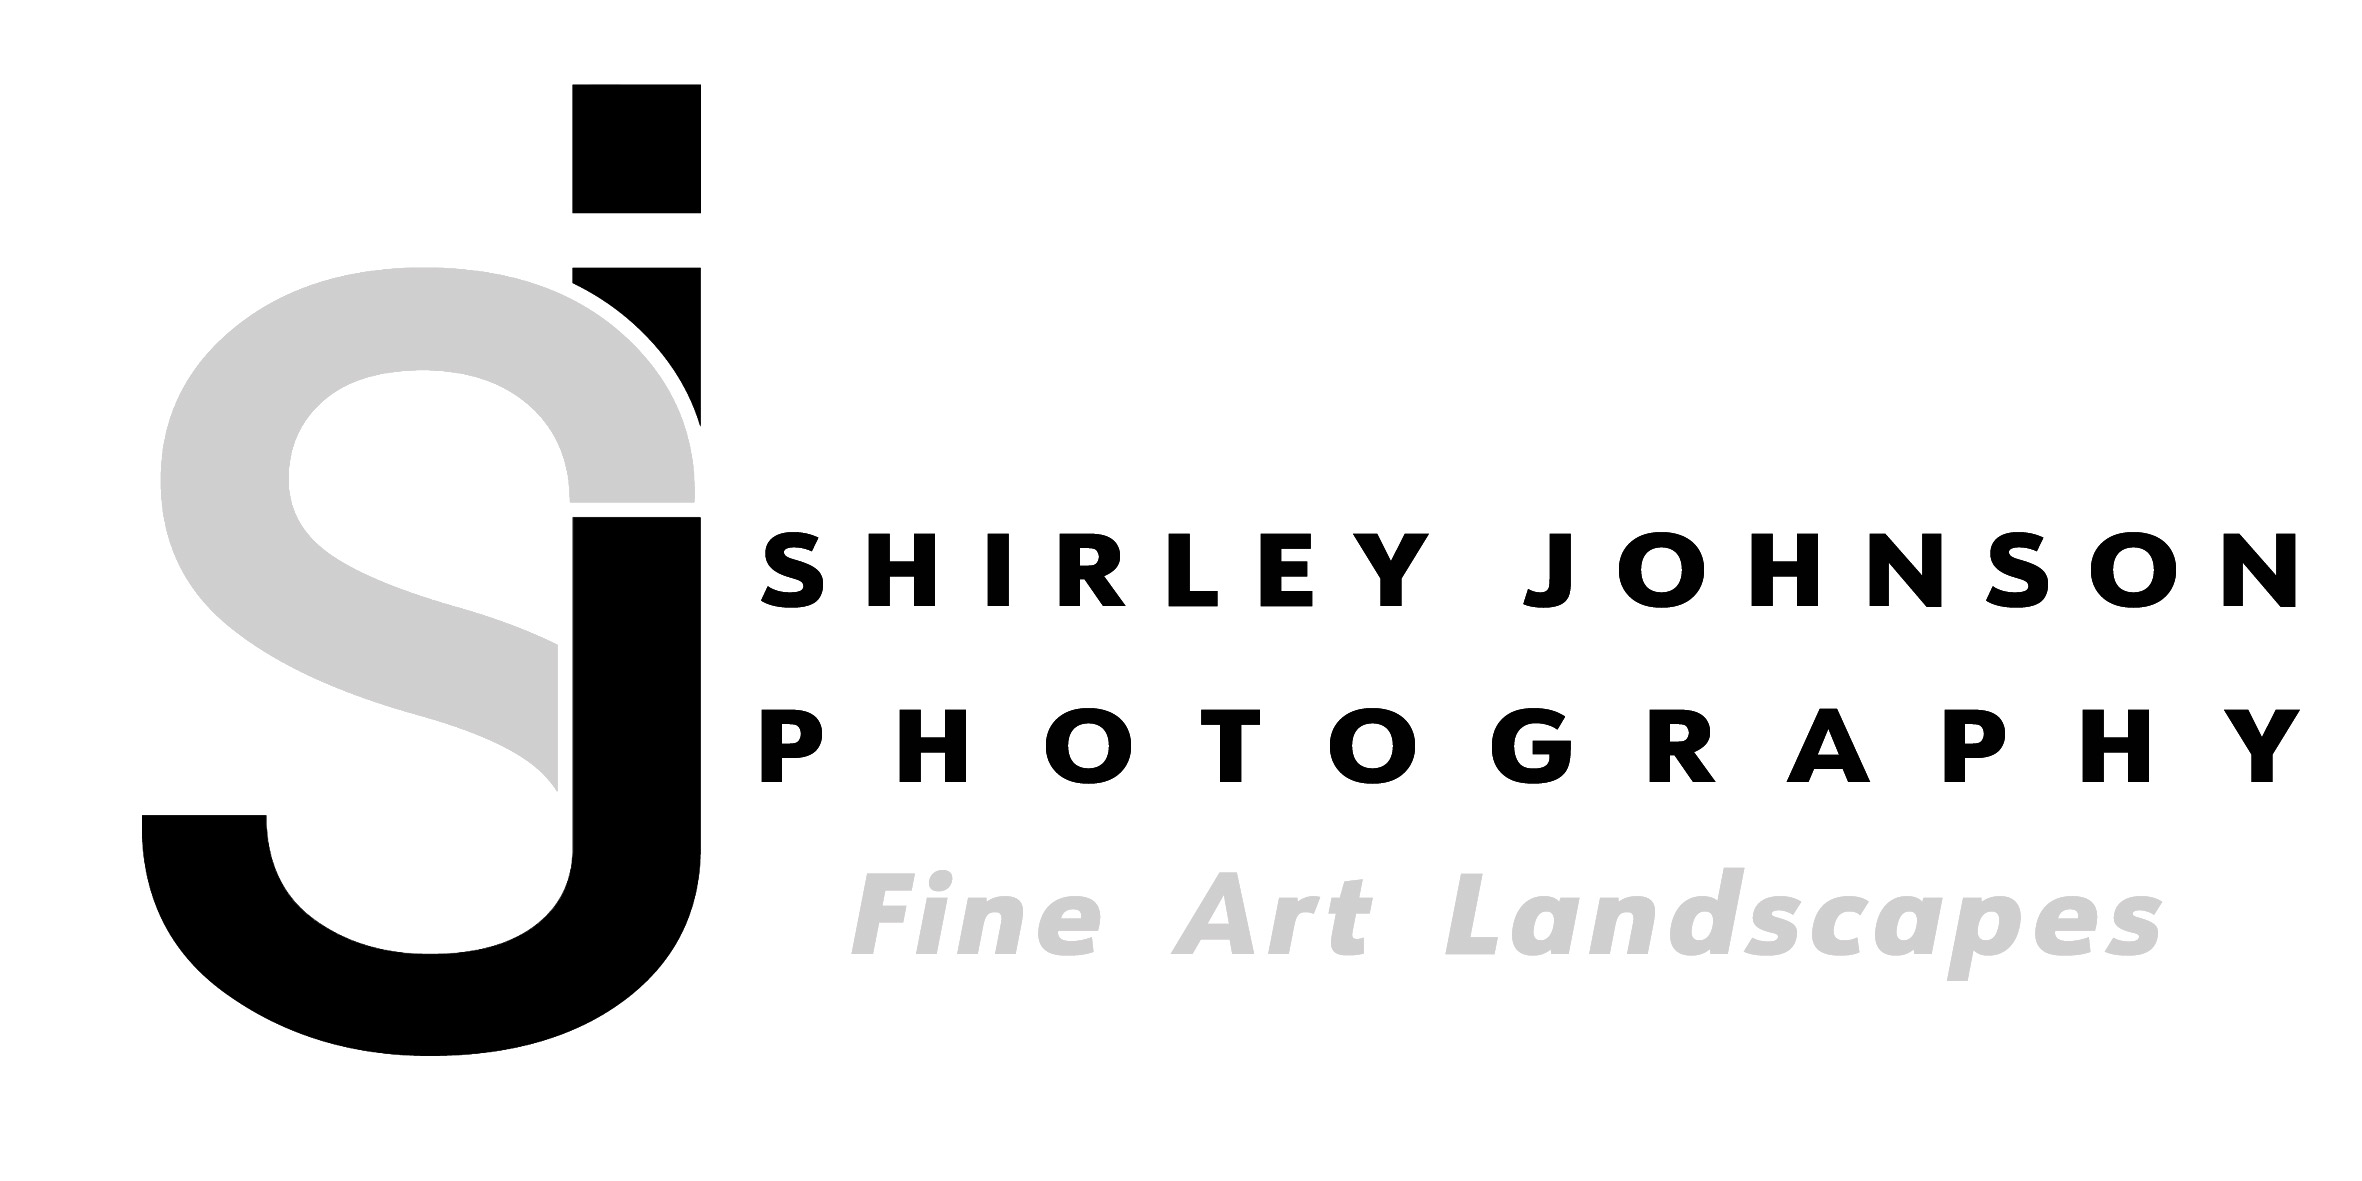 Shirley-Johnson-Photography-Black-Rectangle-Web